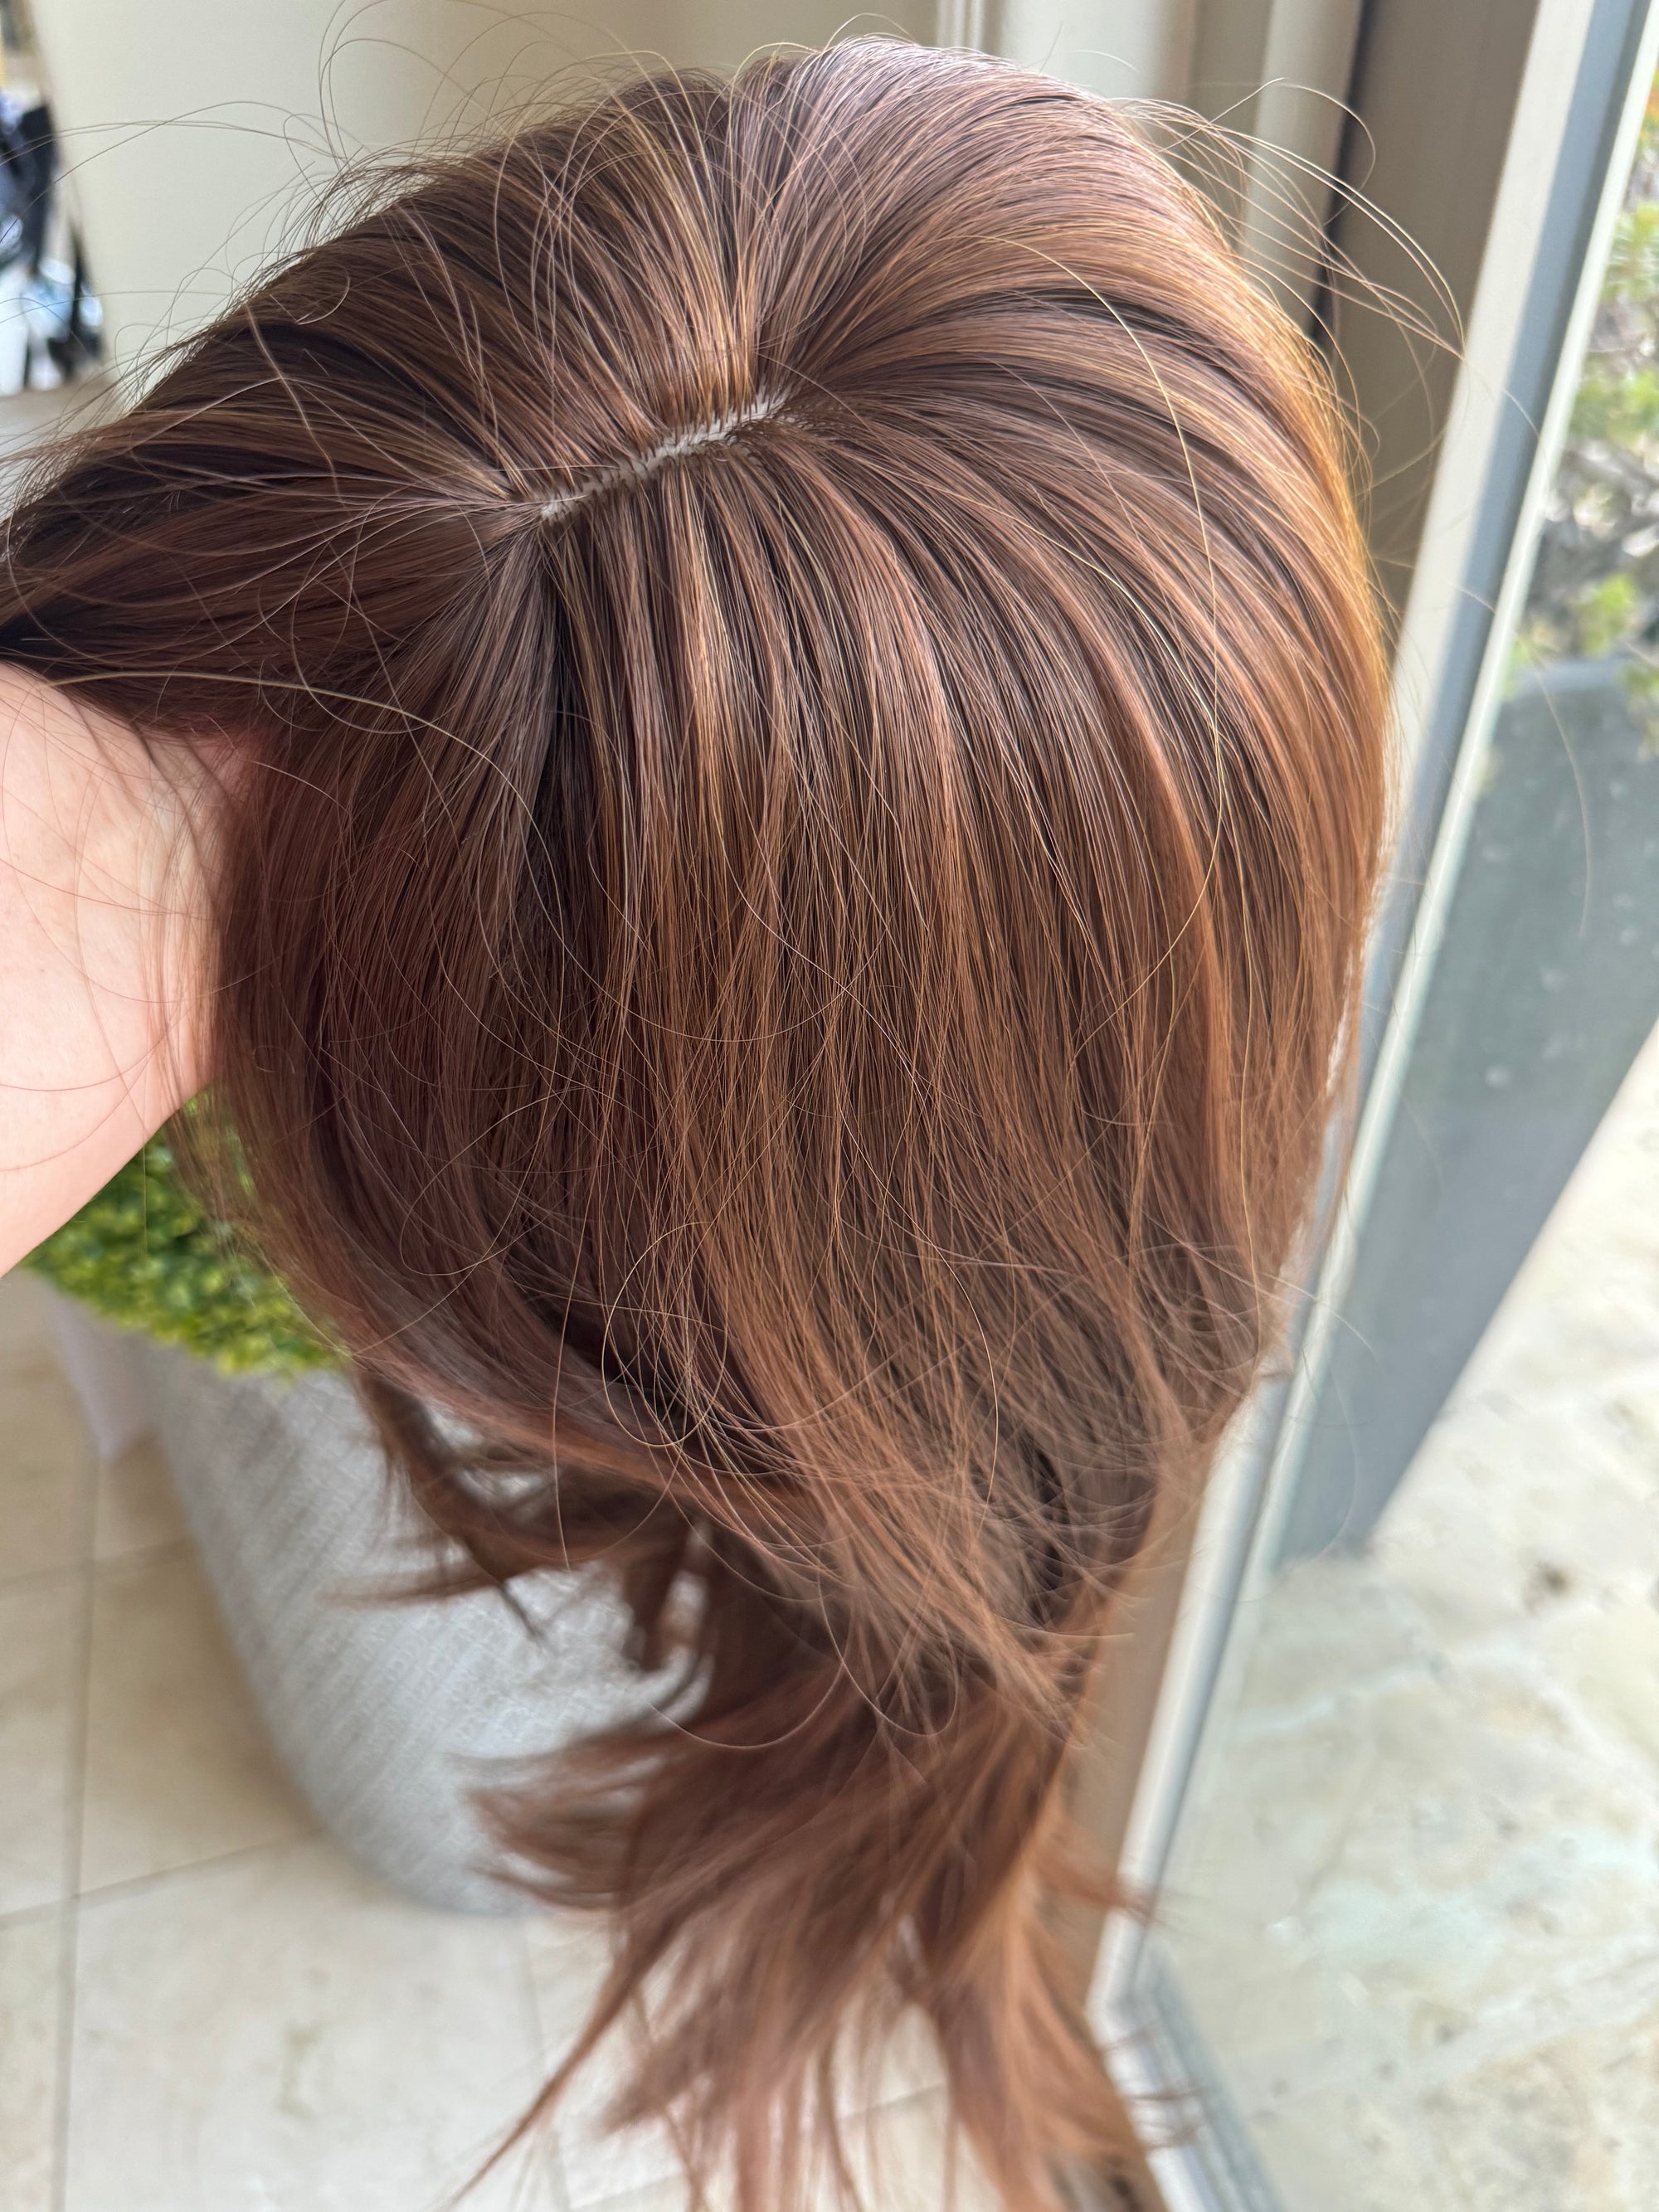 Tillstyle long  wig with bangs caramel brown